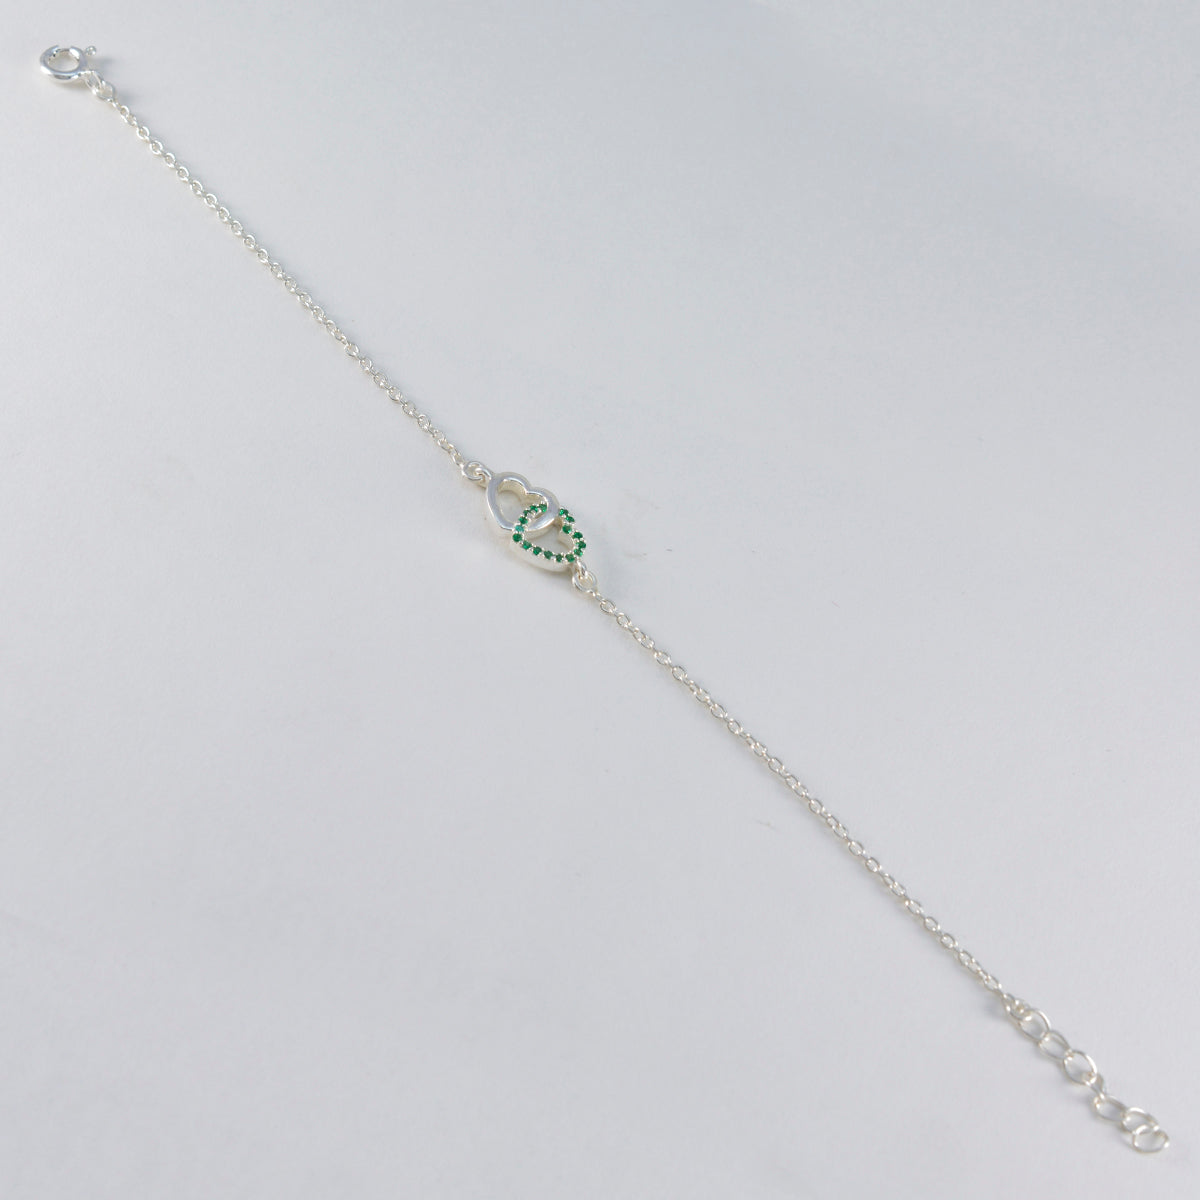 Riyo Großhandel 925 Sterling Silber Armband für Damen Smaragd CZ Armband Lünettenfassung Armband mit Federring Bettelarmband L Größe 6-8,5 Zoll.